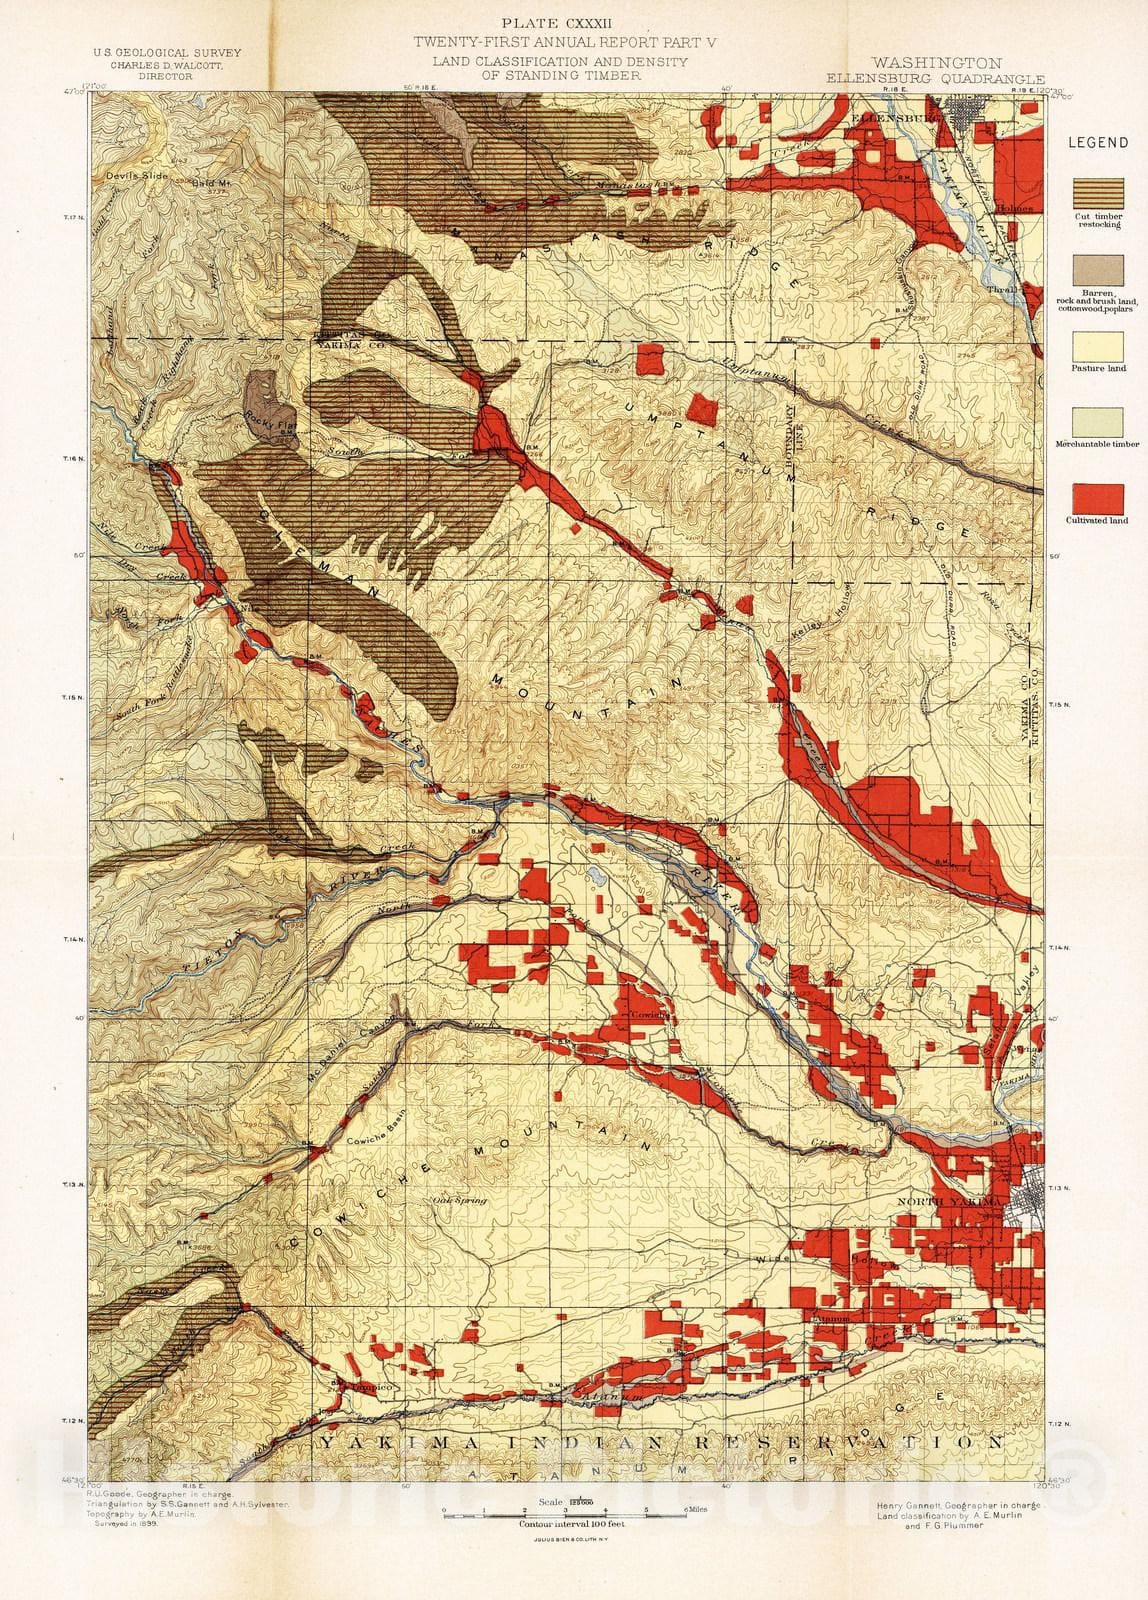 Historic Map : Geologic Atlas - 1900 Plate CXXXII. Ellensburg Quadrangle, Washington, Land Classification and Density of Standing Timber. - Vintage Wall Art